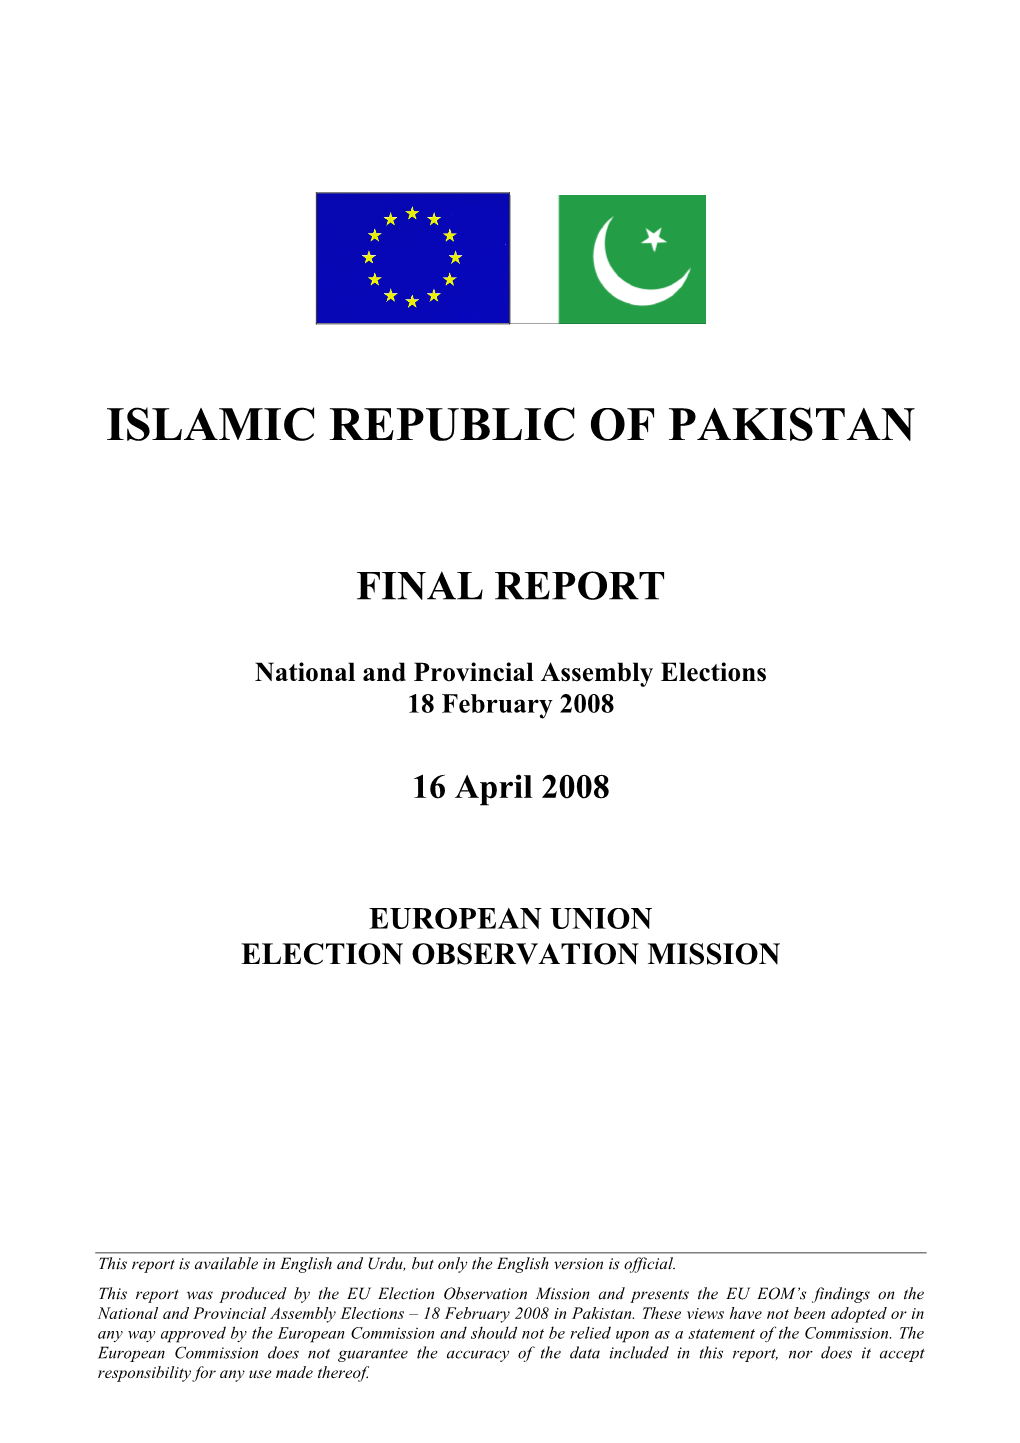 EU Election Observation Mission Pakistan Final Report 2008